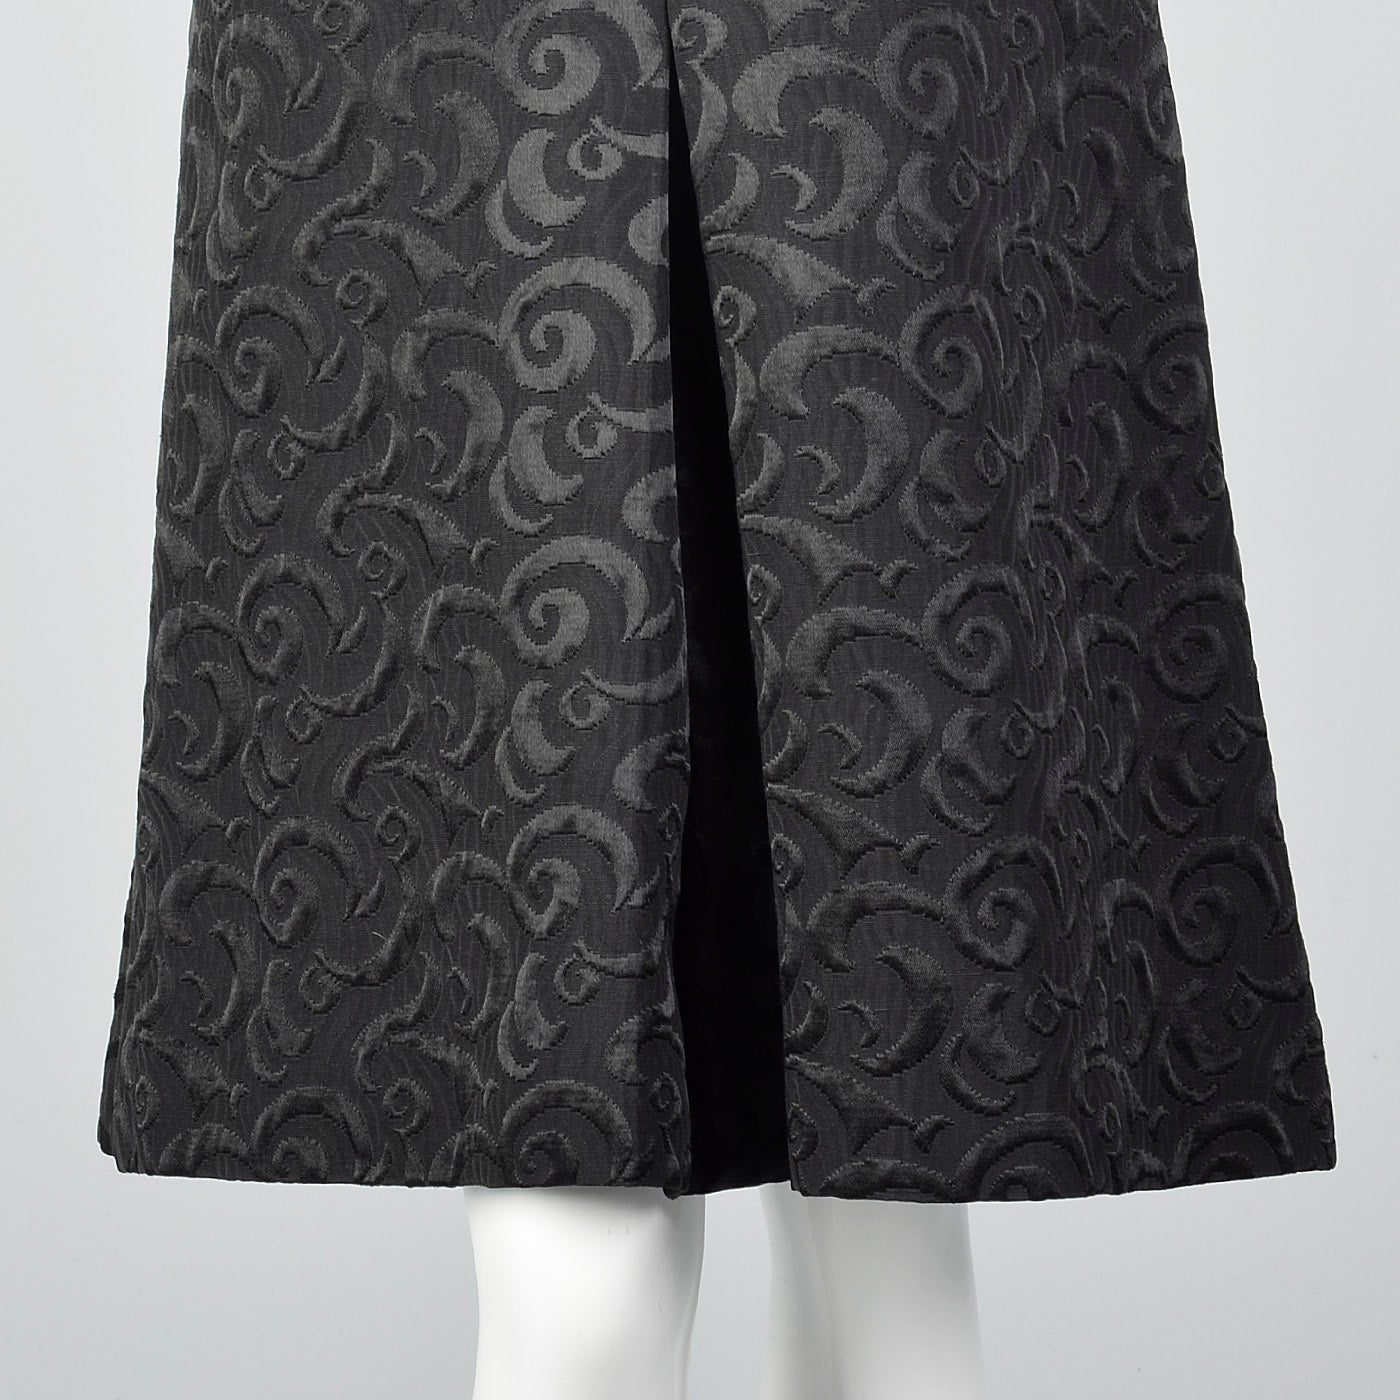 1960s Black Brocade Swing Dress